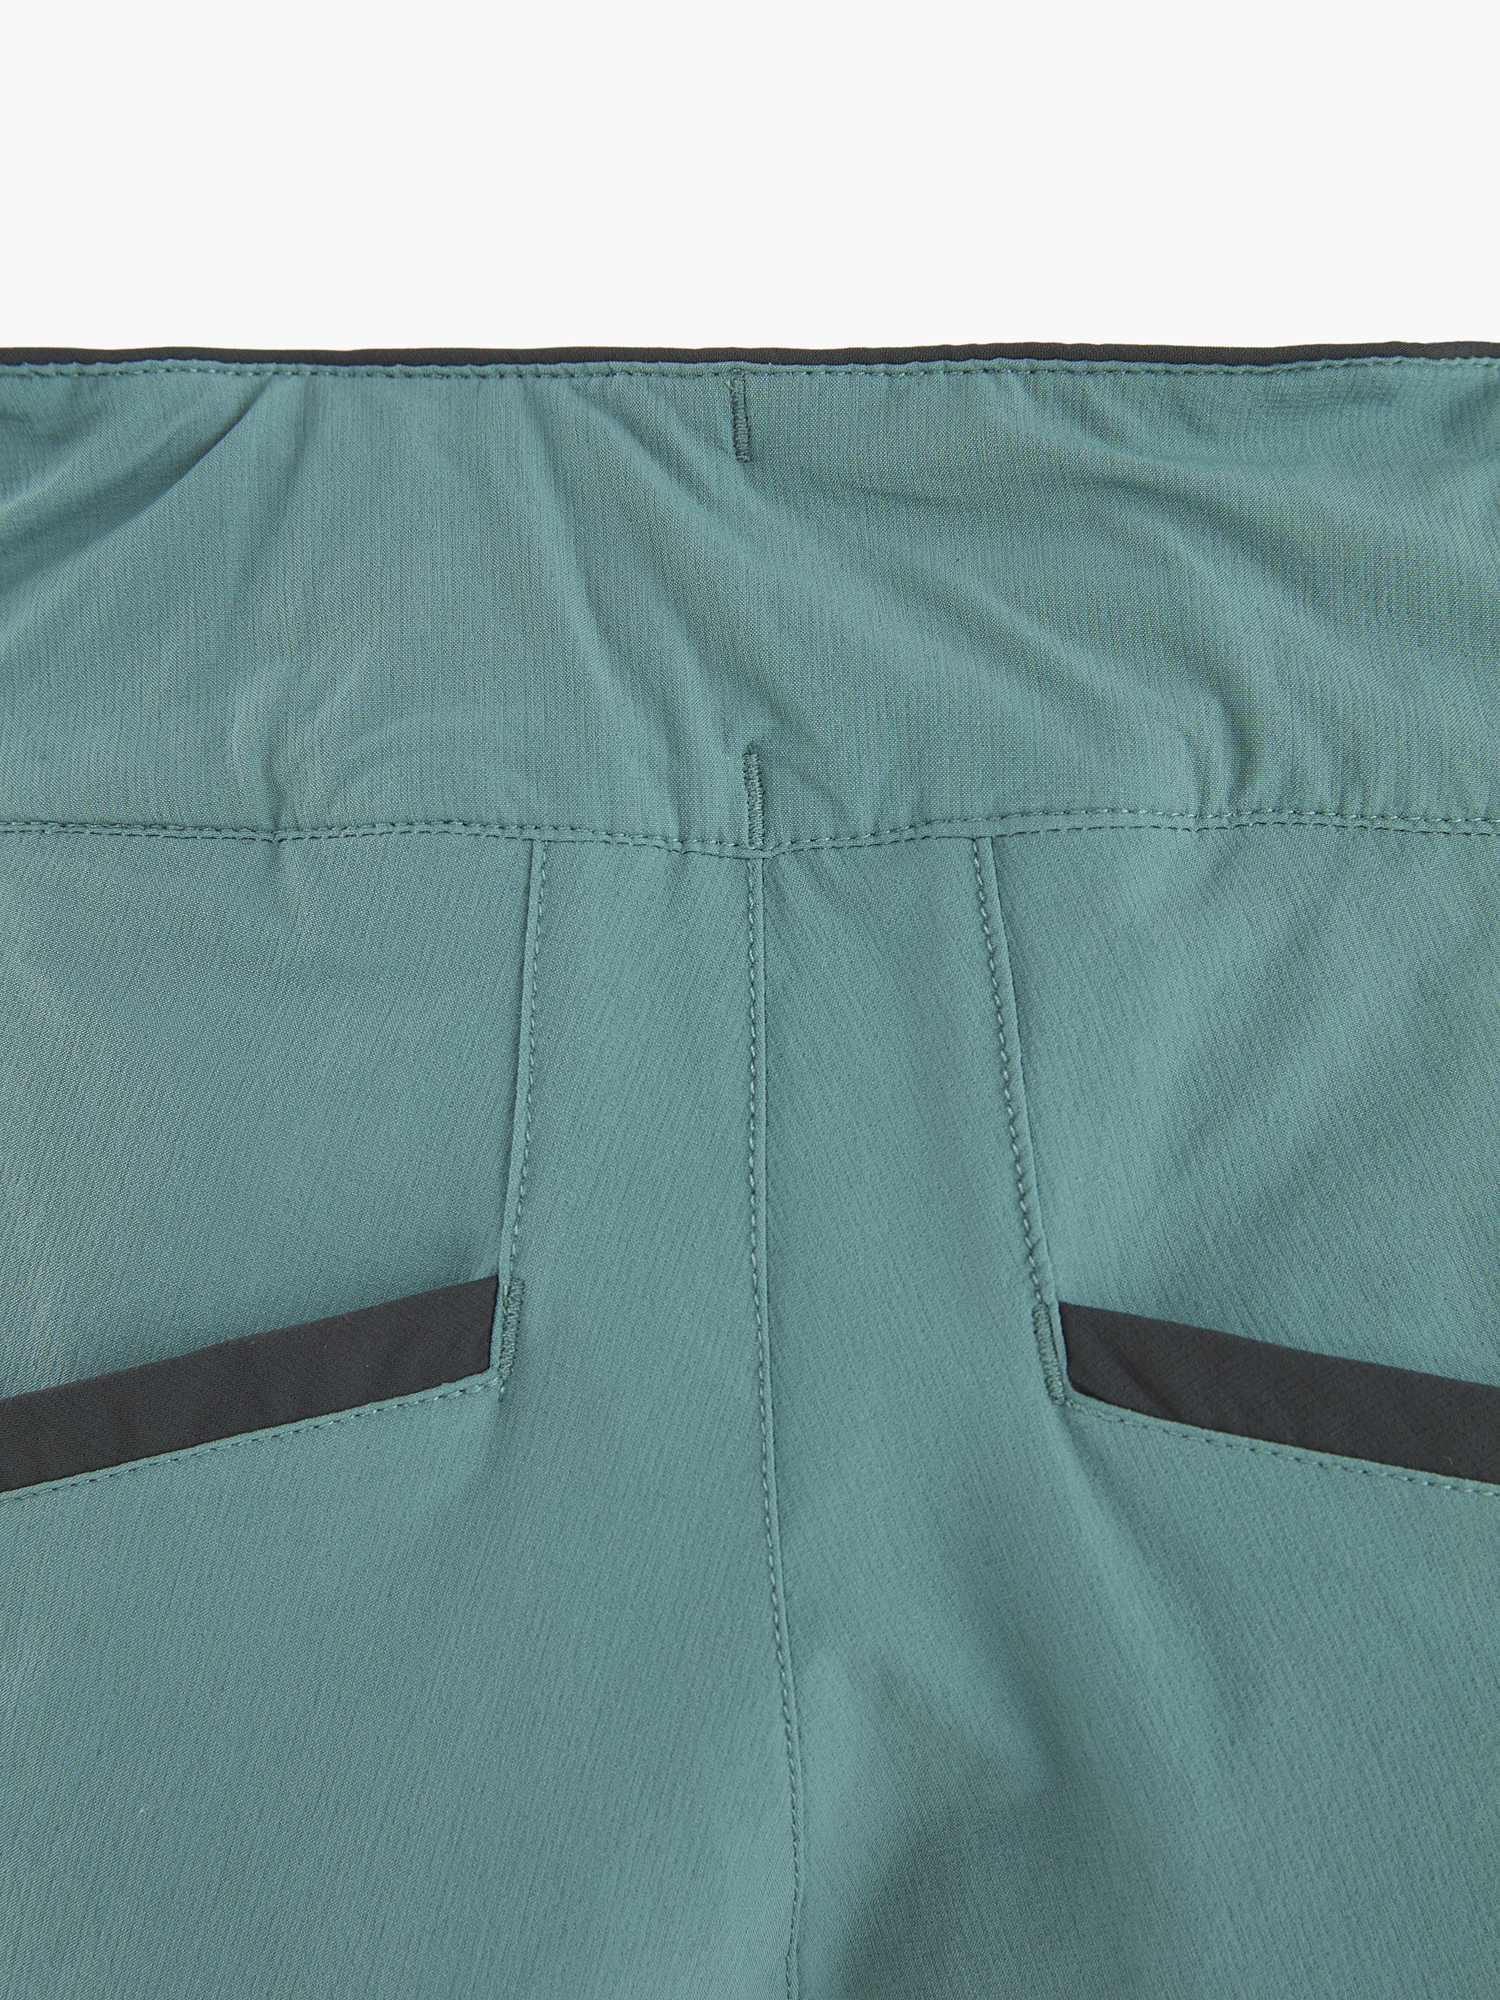 15570W91 - Vanadis 2.0 Shorts W's - Monkshood Blue